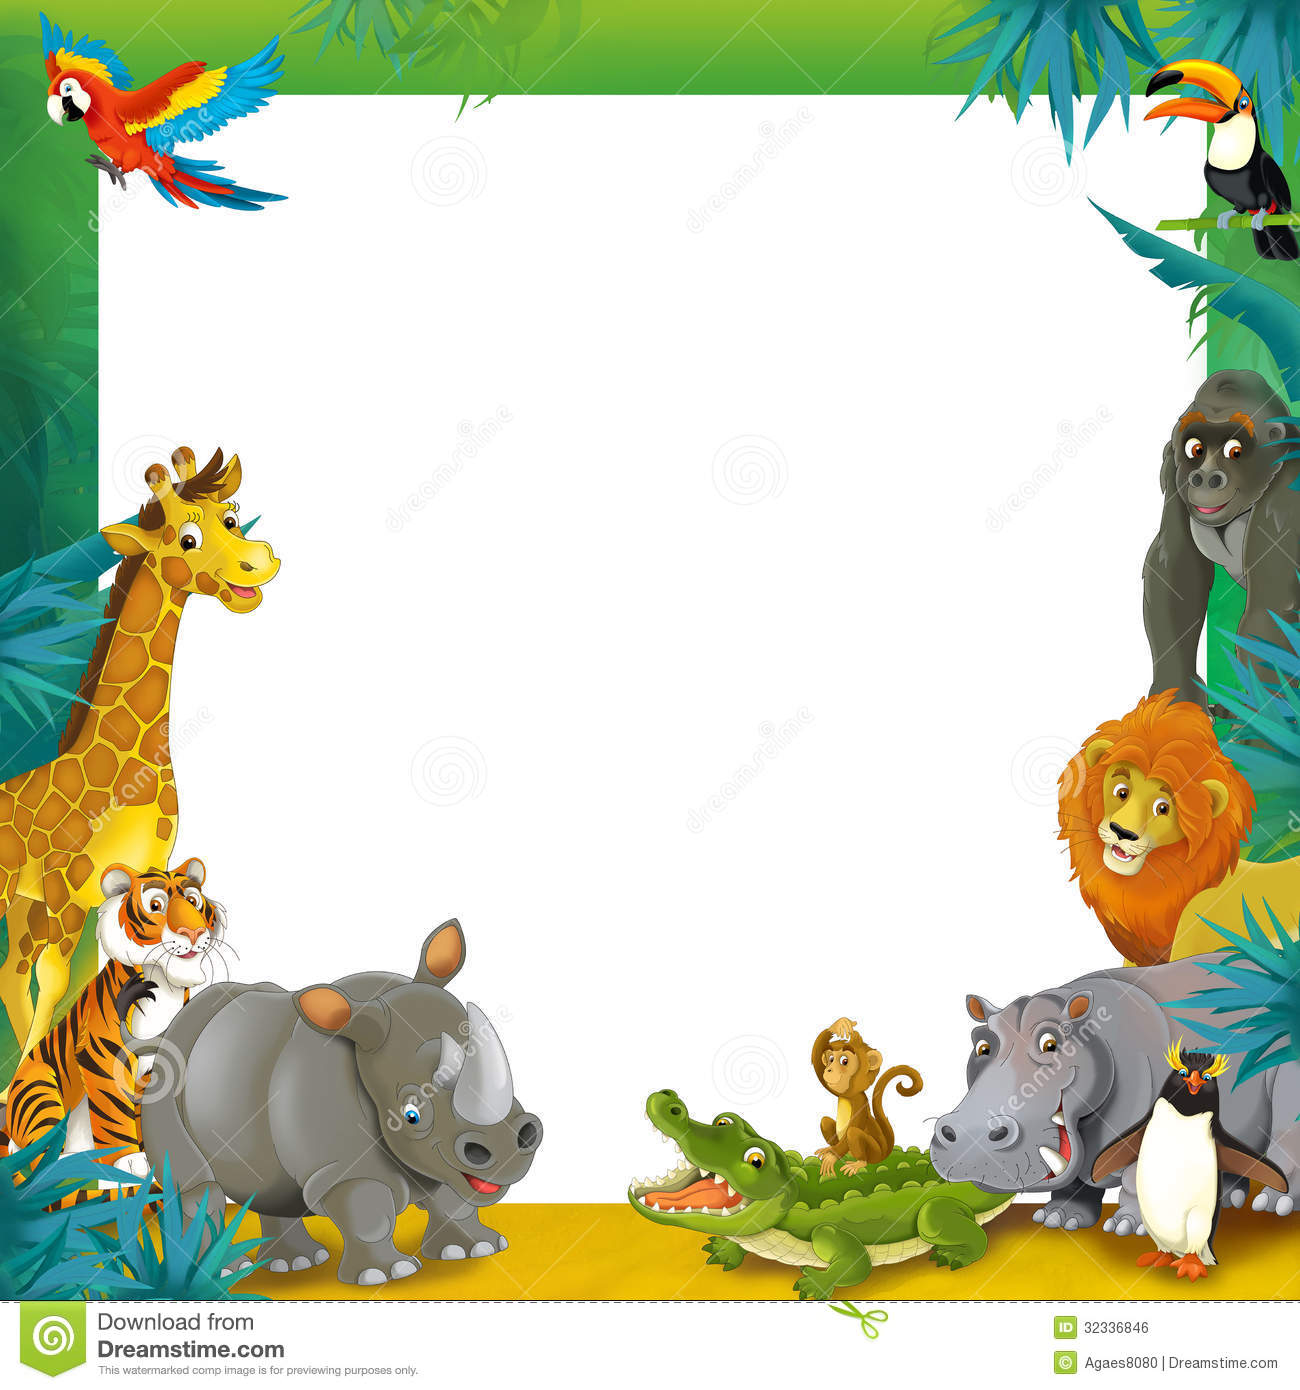 Cartoon Safari   Jungle   Frame Border Template   Illustration For The